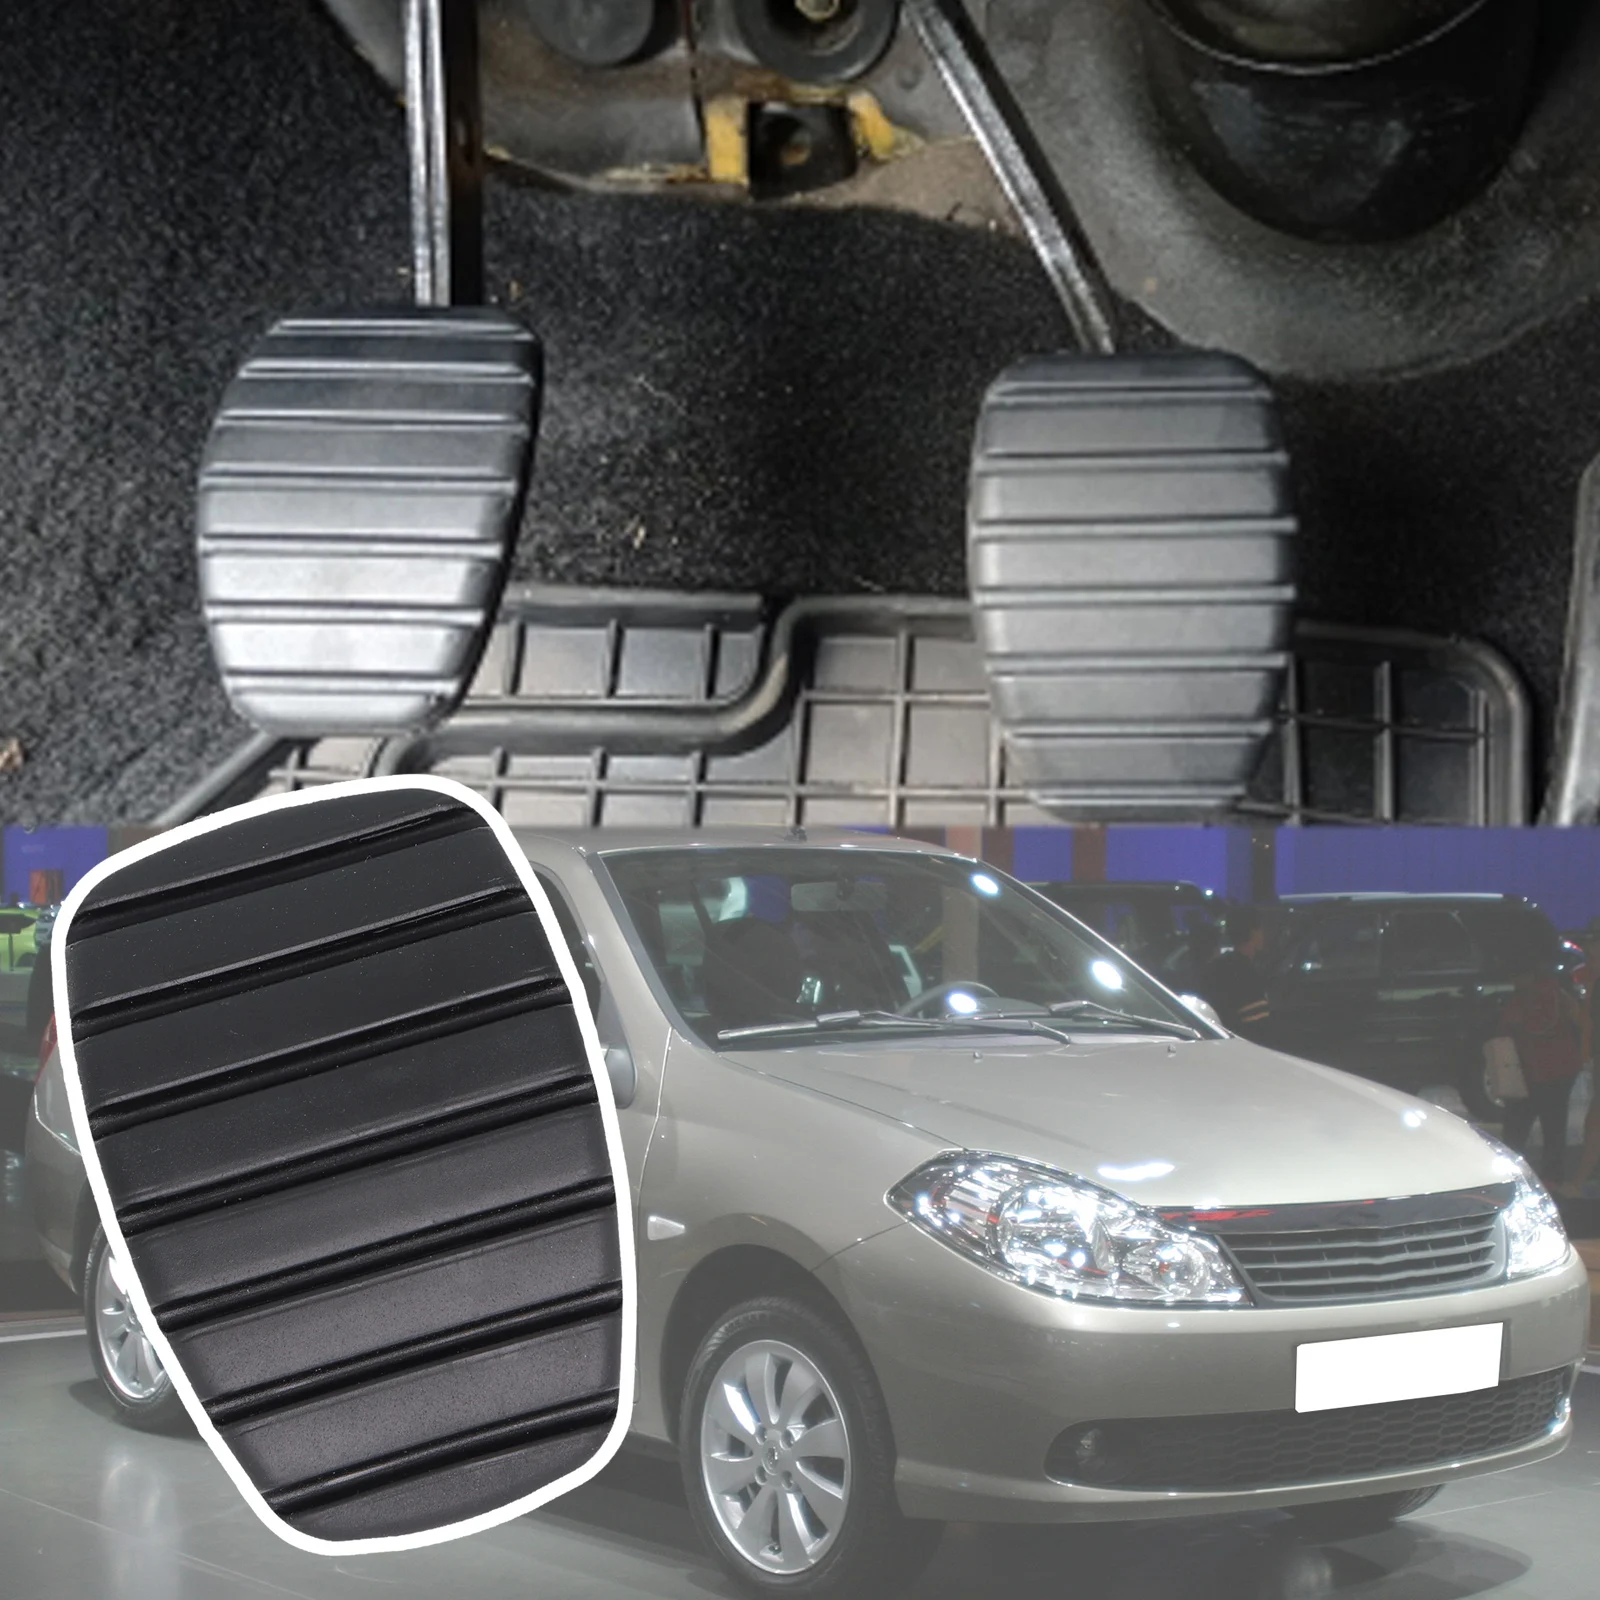 Brake Clutch Foot Pedal Pad Cover Replacement For Nissan Platina Dacia Renault Logan Symbol Thalia Citius 2003 - 2016 2017 2018